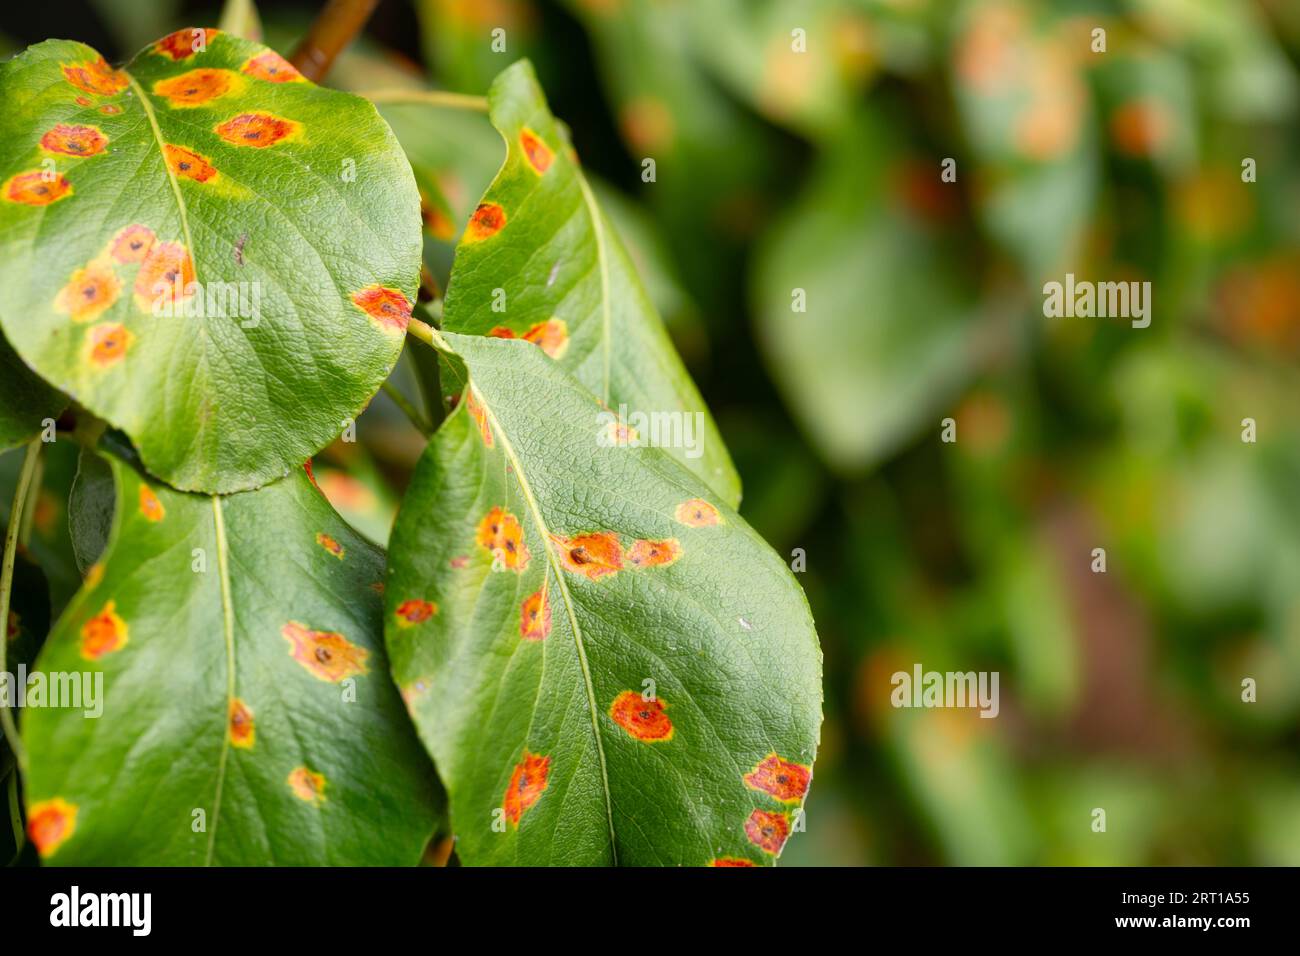 Gymnosporangium sabinae (European Pear Rust) on pear leaves Stock Photo